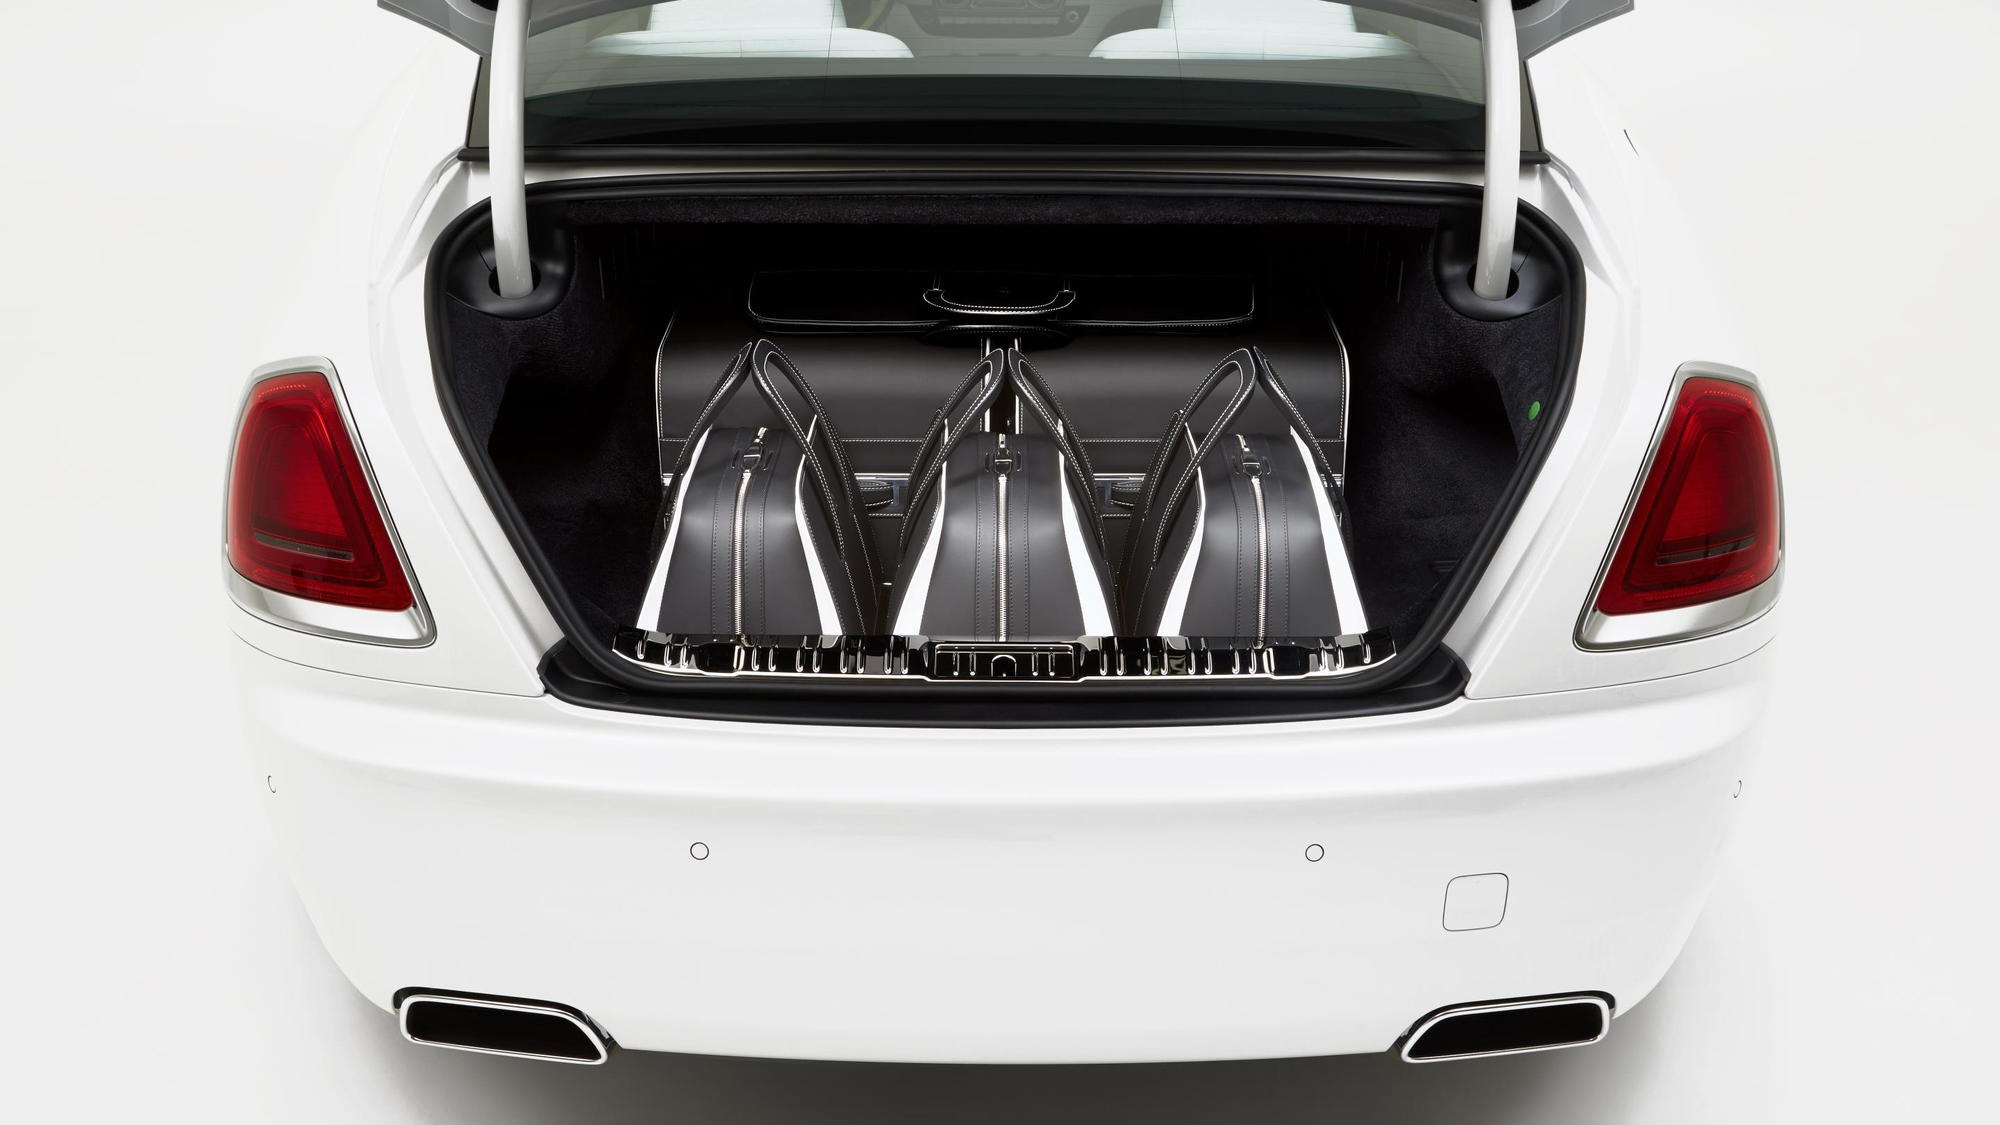 Rolls-Royce's new Wraith-inspired luggage set